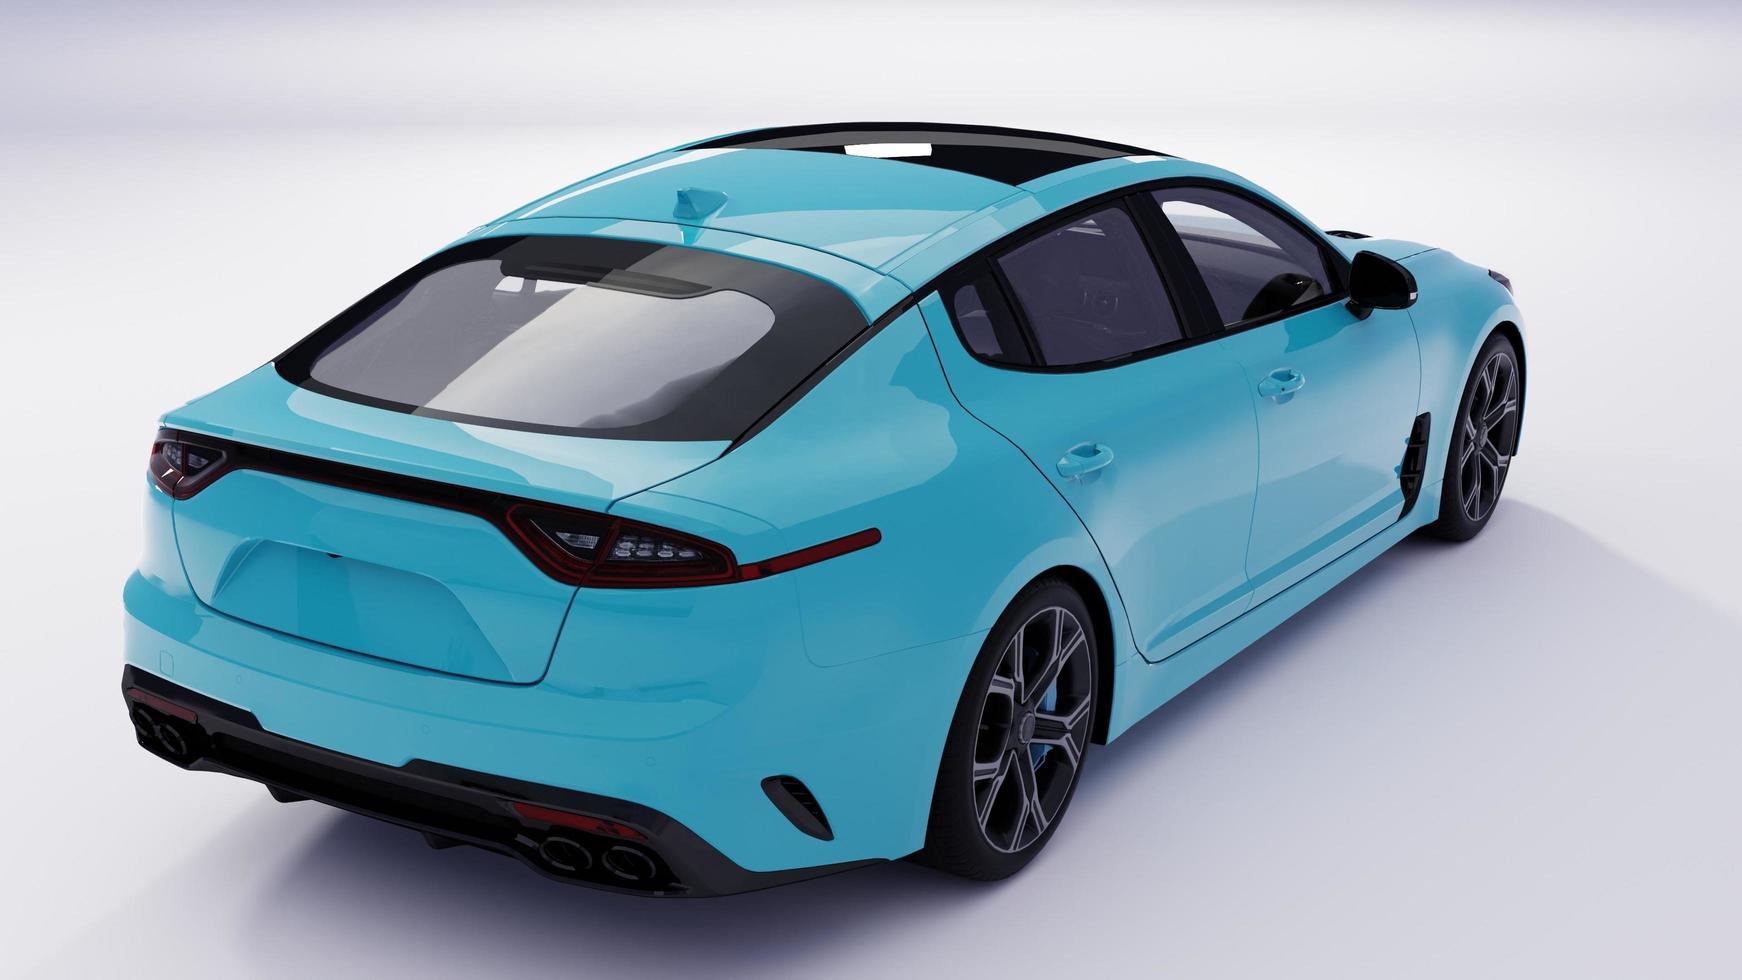 3D rendering sport blue car on  white bakcground.jpg photo